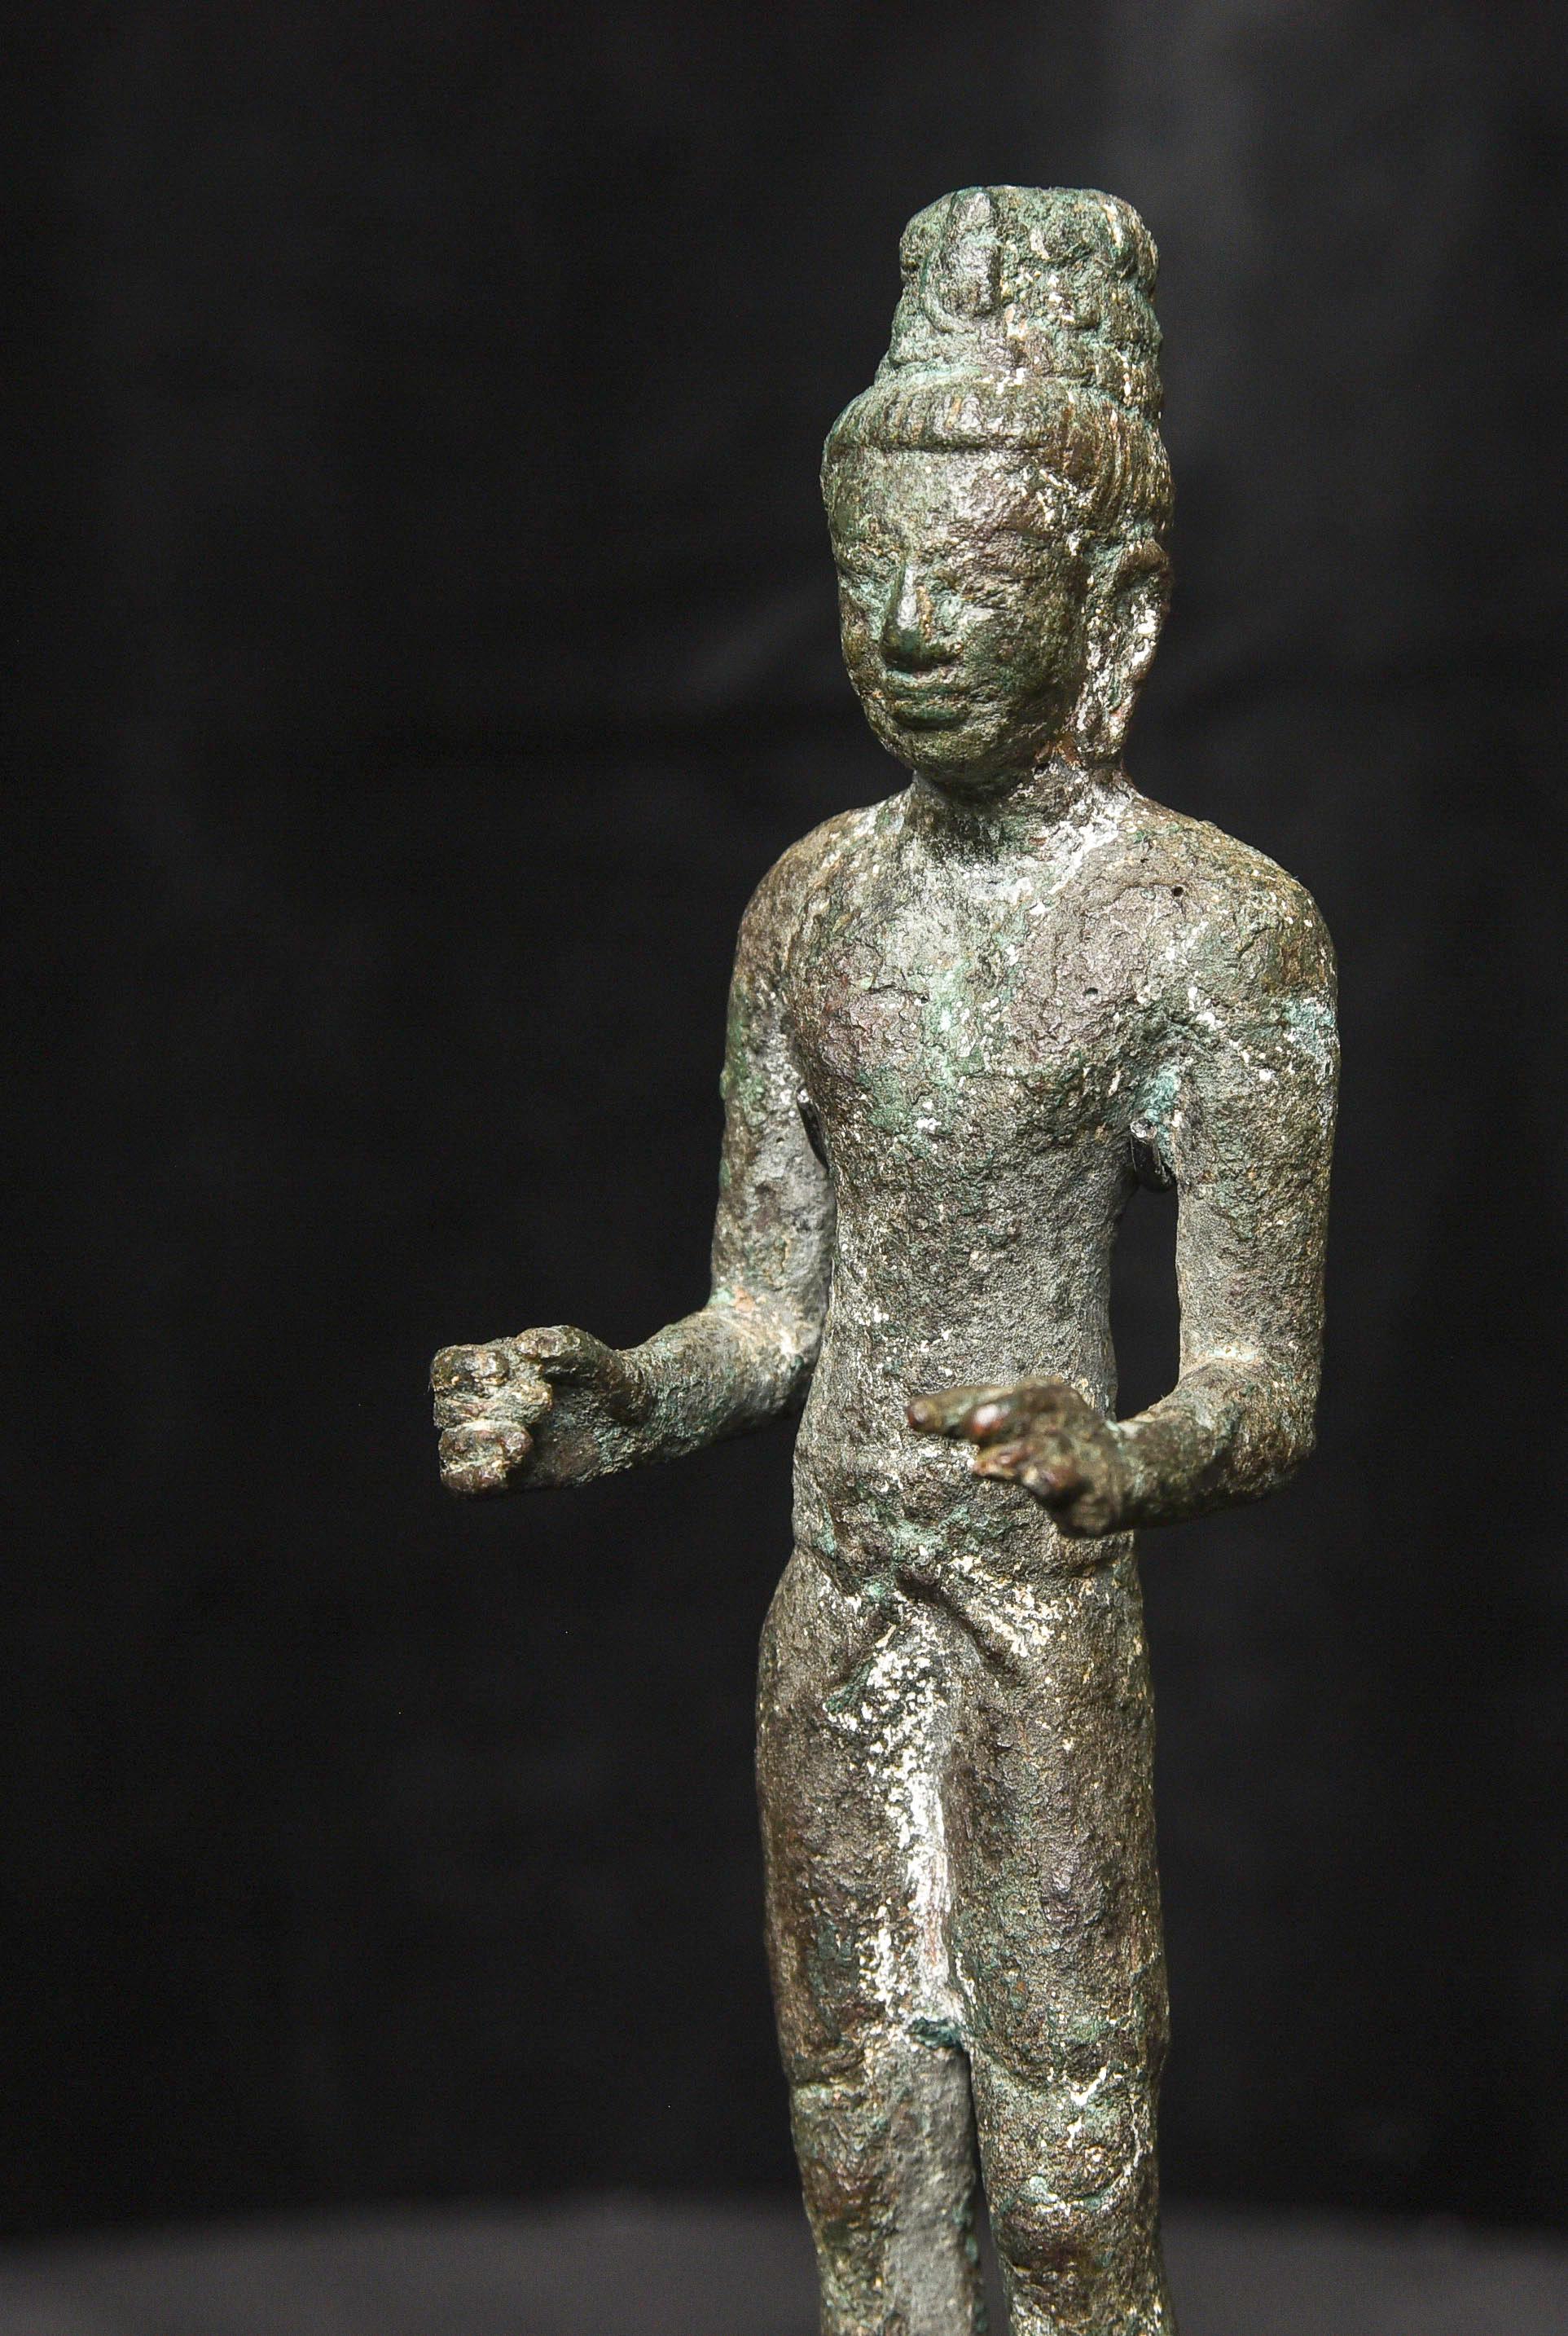 7th/9thC Solid-Cast Bronze Prakhon Chai Buddha or Bodhisattva - 9688 For Sale 6